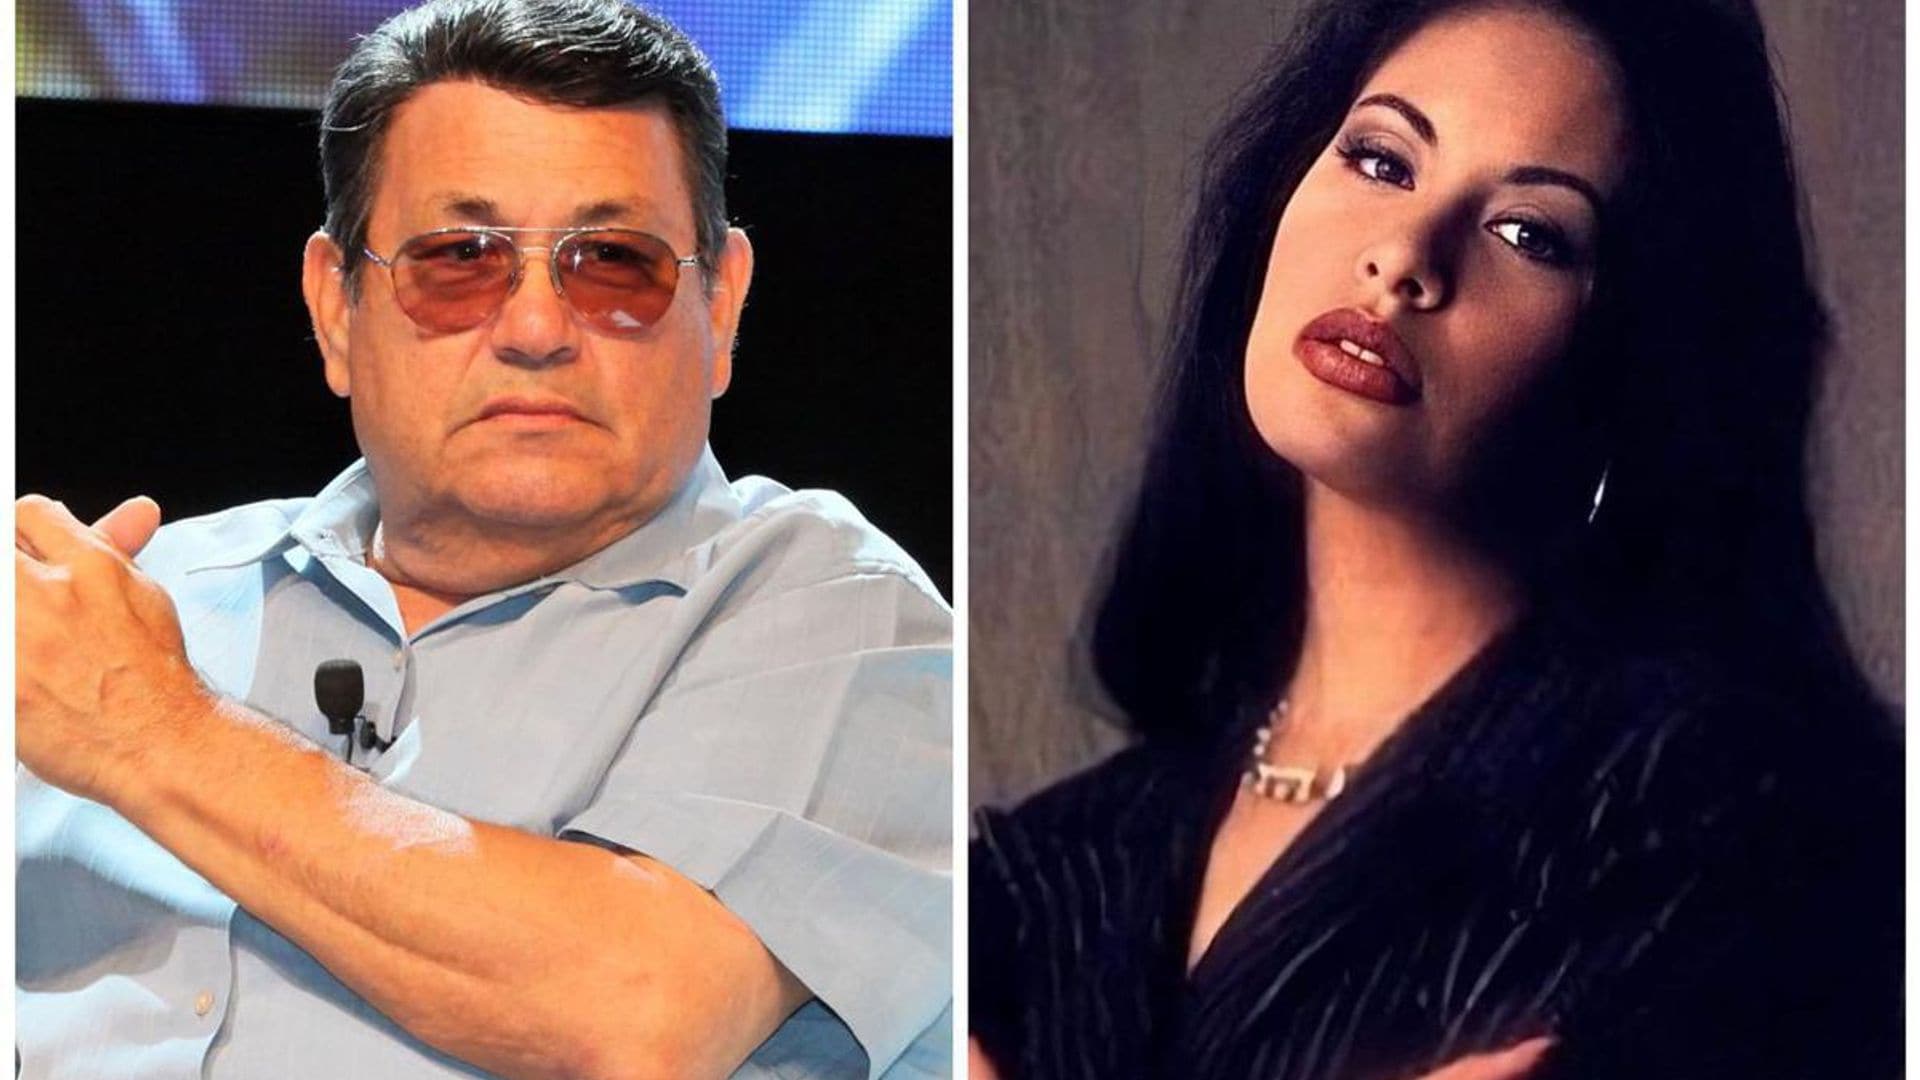 Abraham Quintanilla slams upcoming docuseries about Selena’s convicted killer